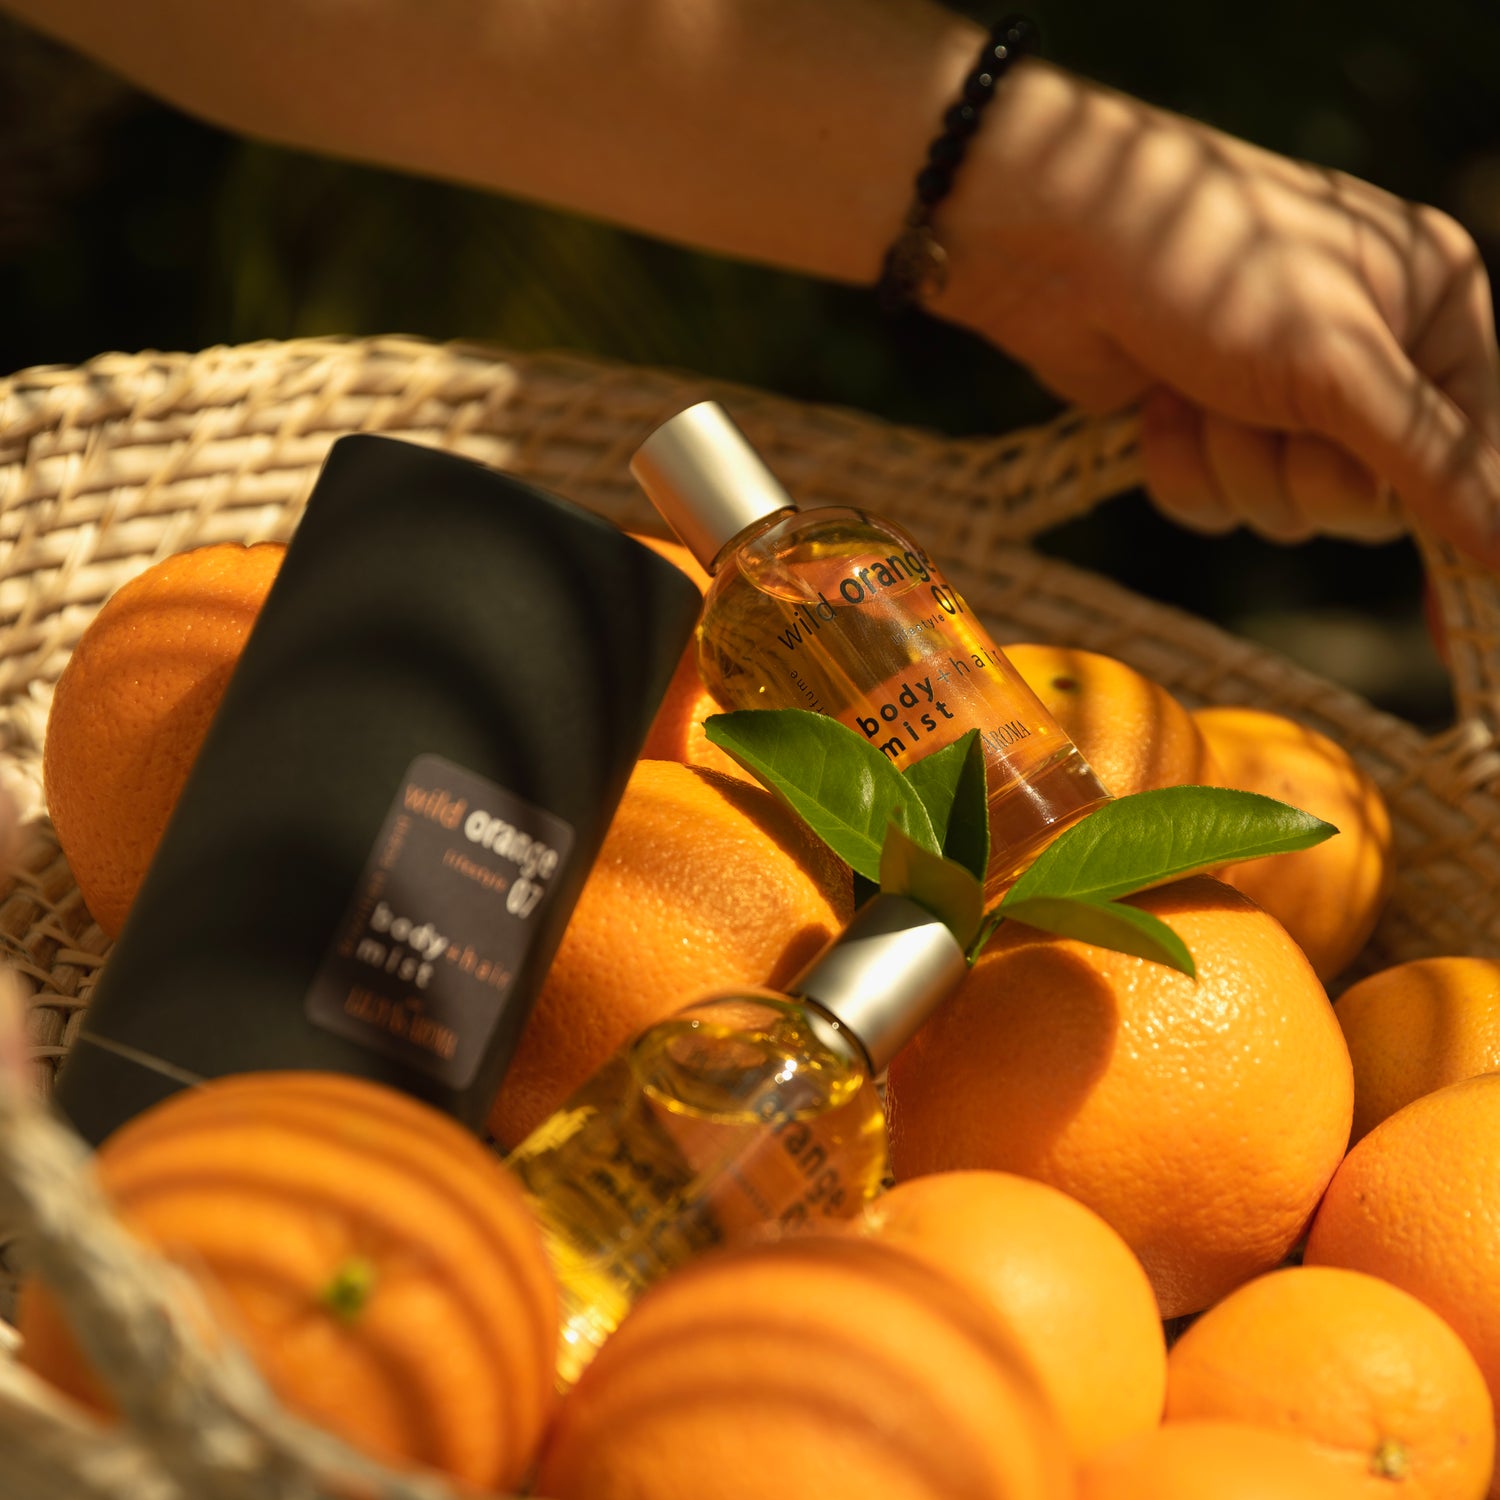 Wild Orange 07, Natural Fragrance Mist  for Body &amp; Hair,  Orange &amp; Neroli Essential Oils, Tropical Brazilian Scent 3.4 fl.oz